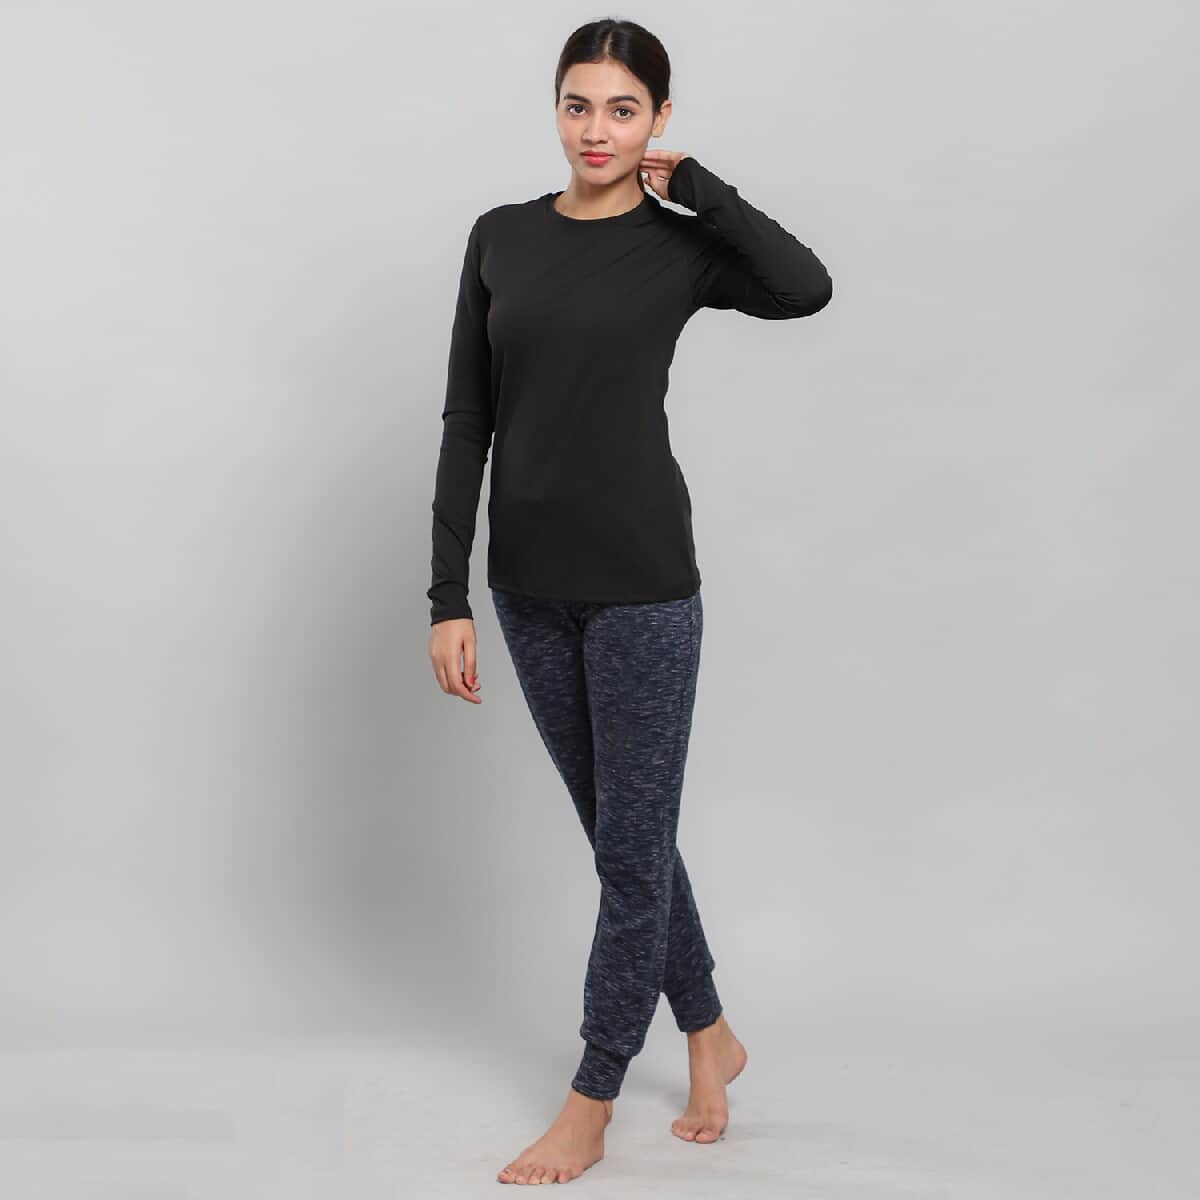 JOVIE Black 90% Polyester & 10% Spandex Long Sleeve T-Shirt- L image number 4